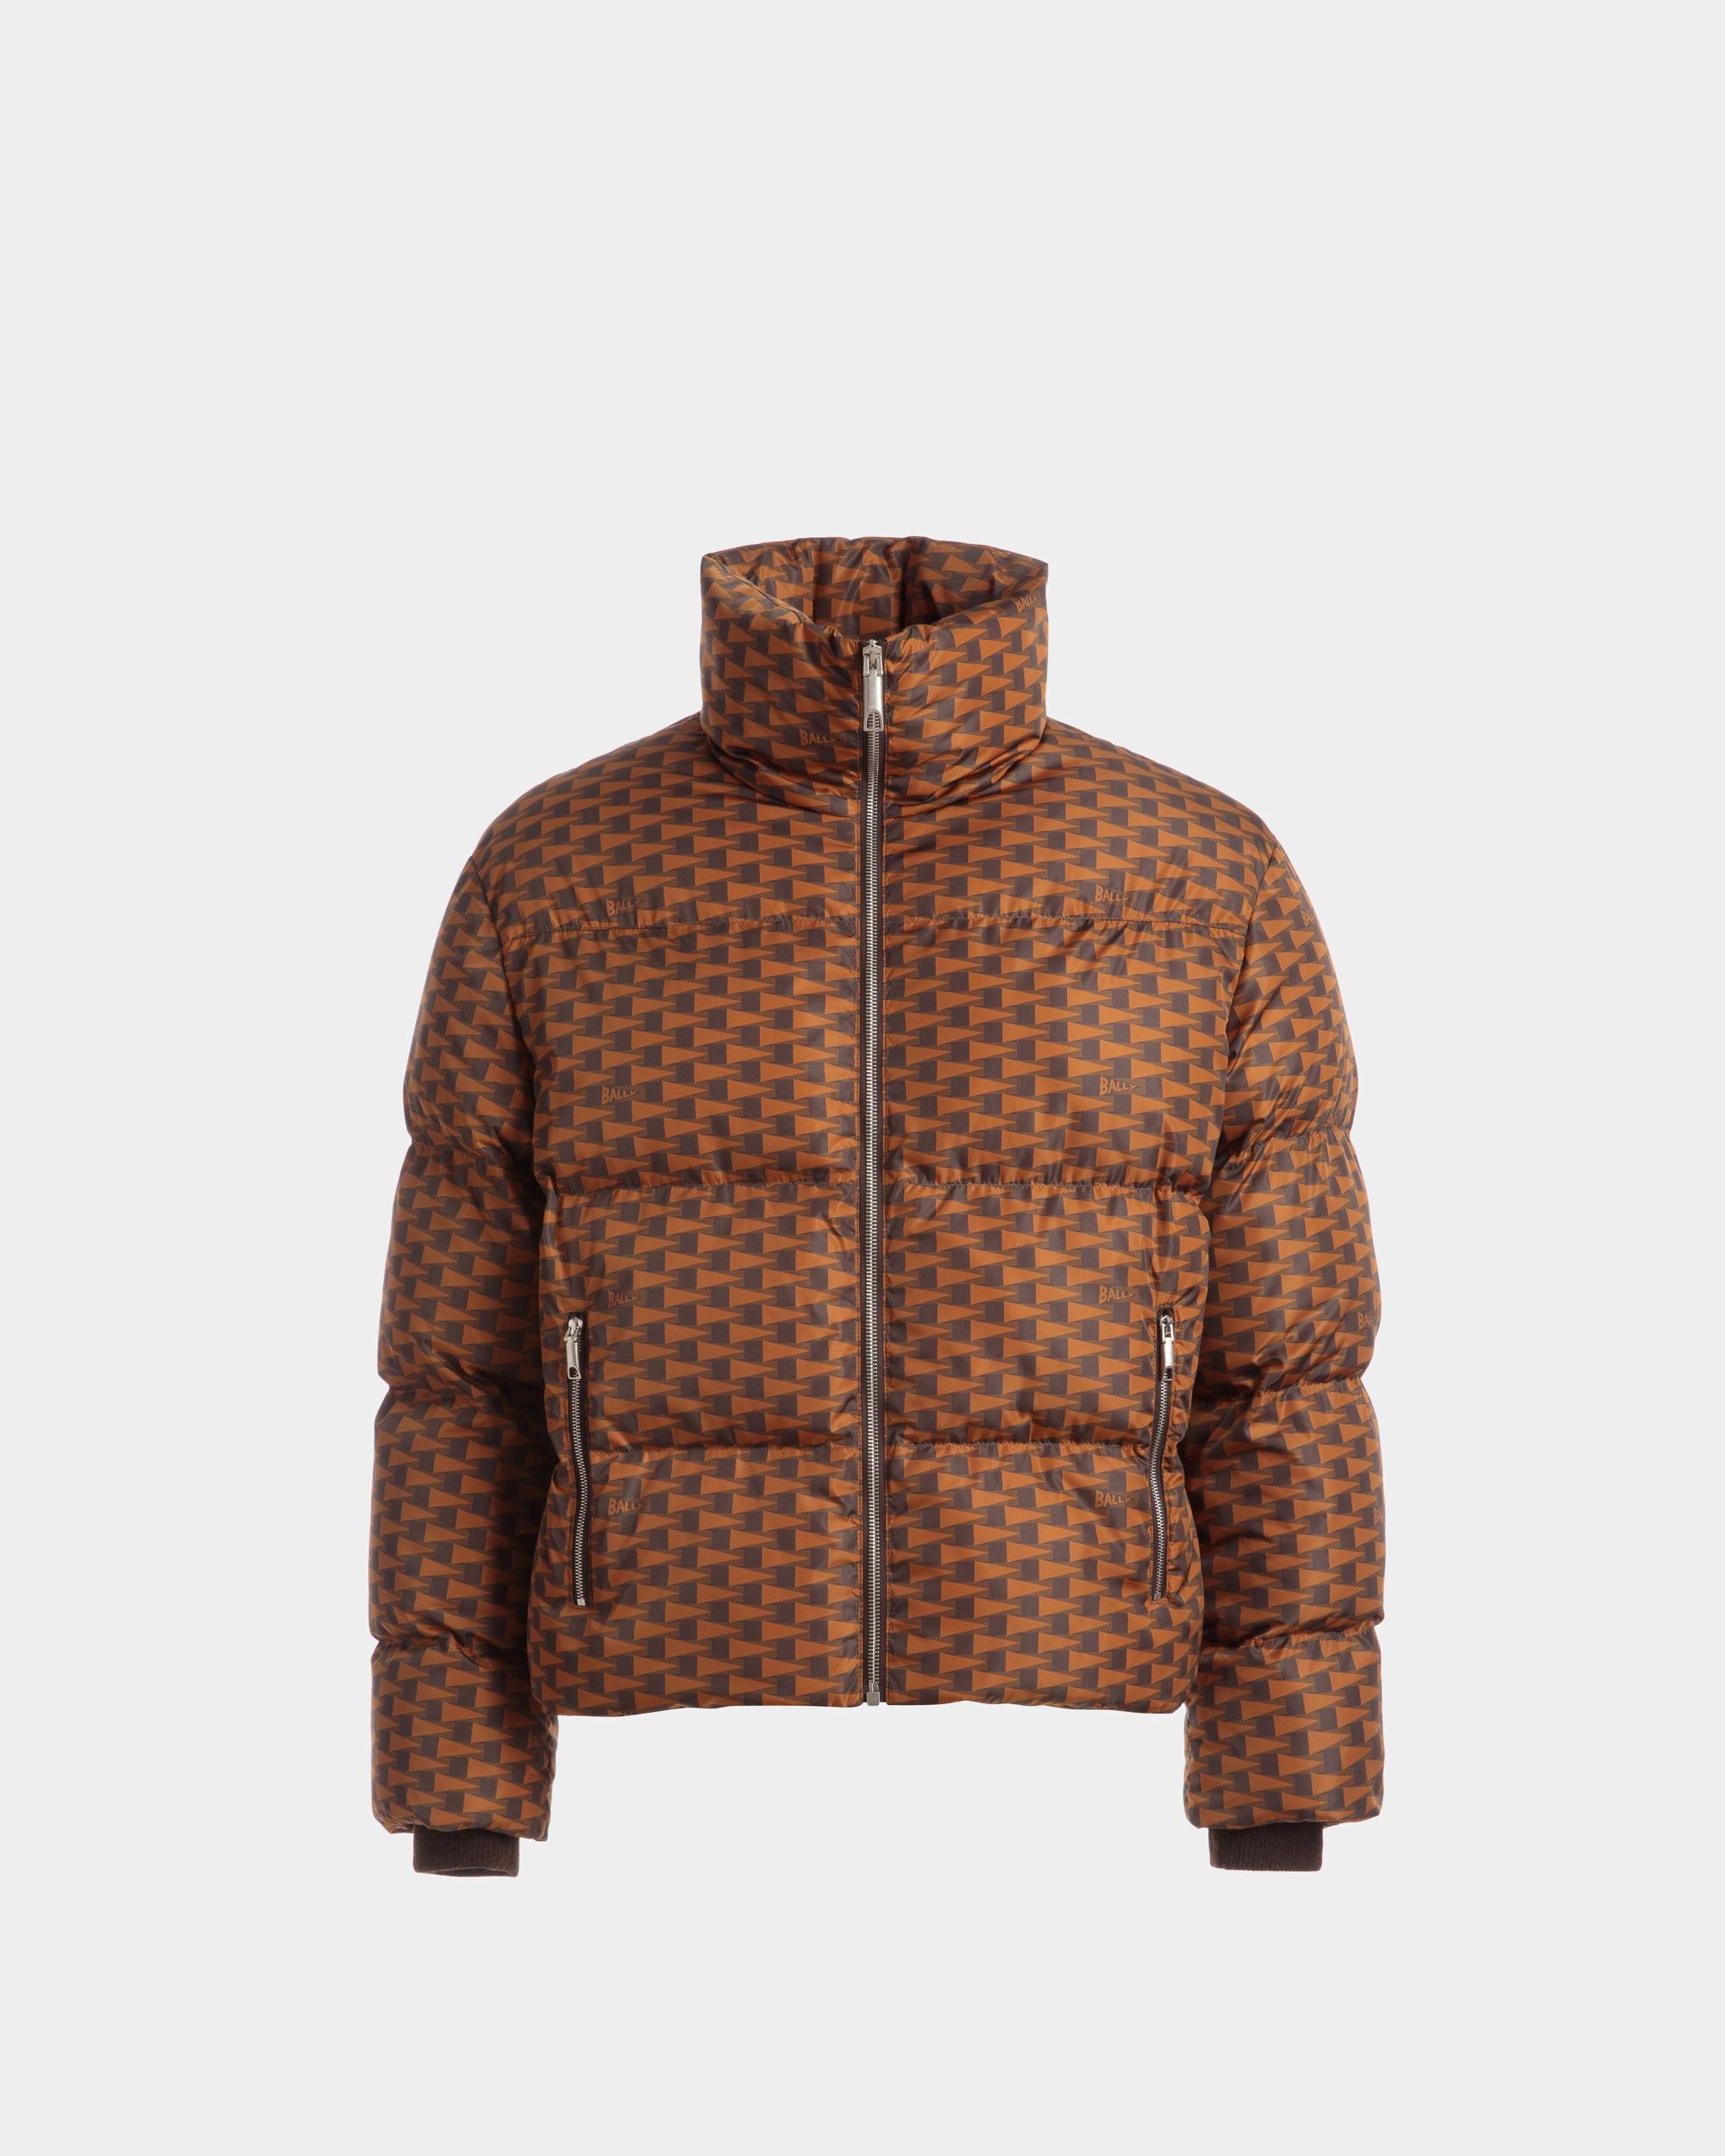 Puffer Jacket | Men's Outerwear | Brown Nylon | Bally | Still Life Front